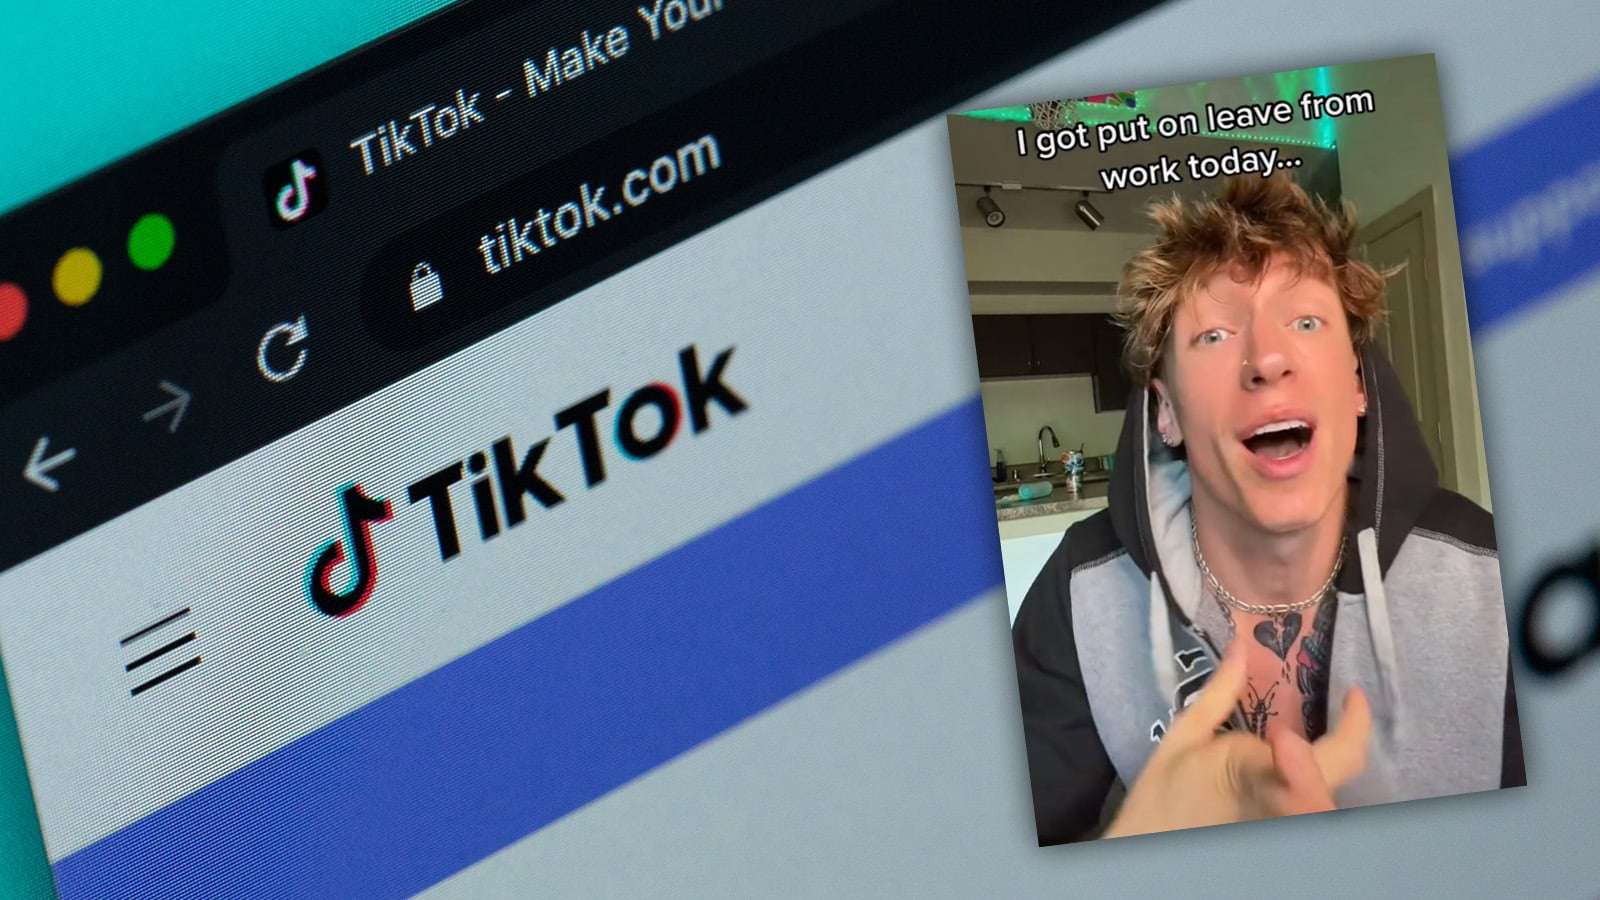 TikTok Teacher on leave after 'thirst trap' complaints